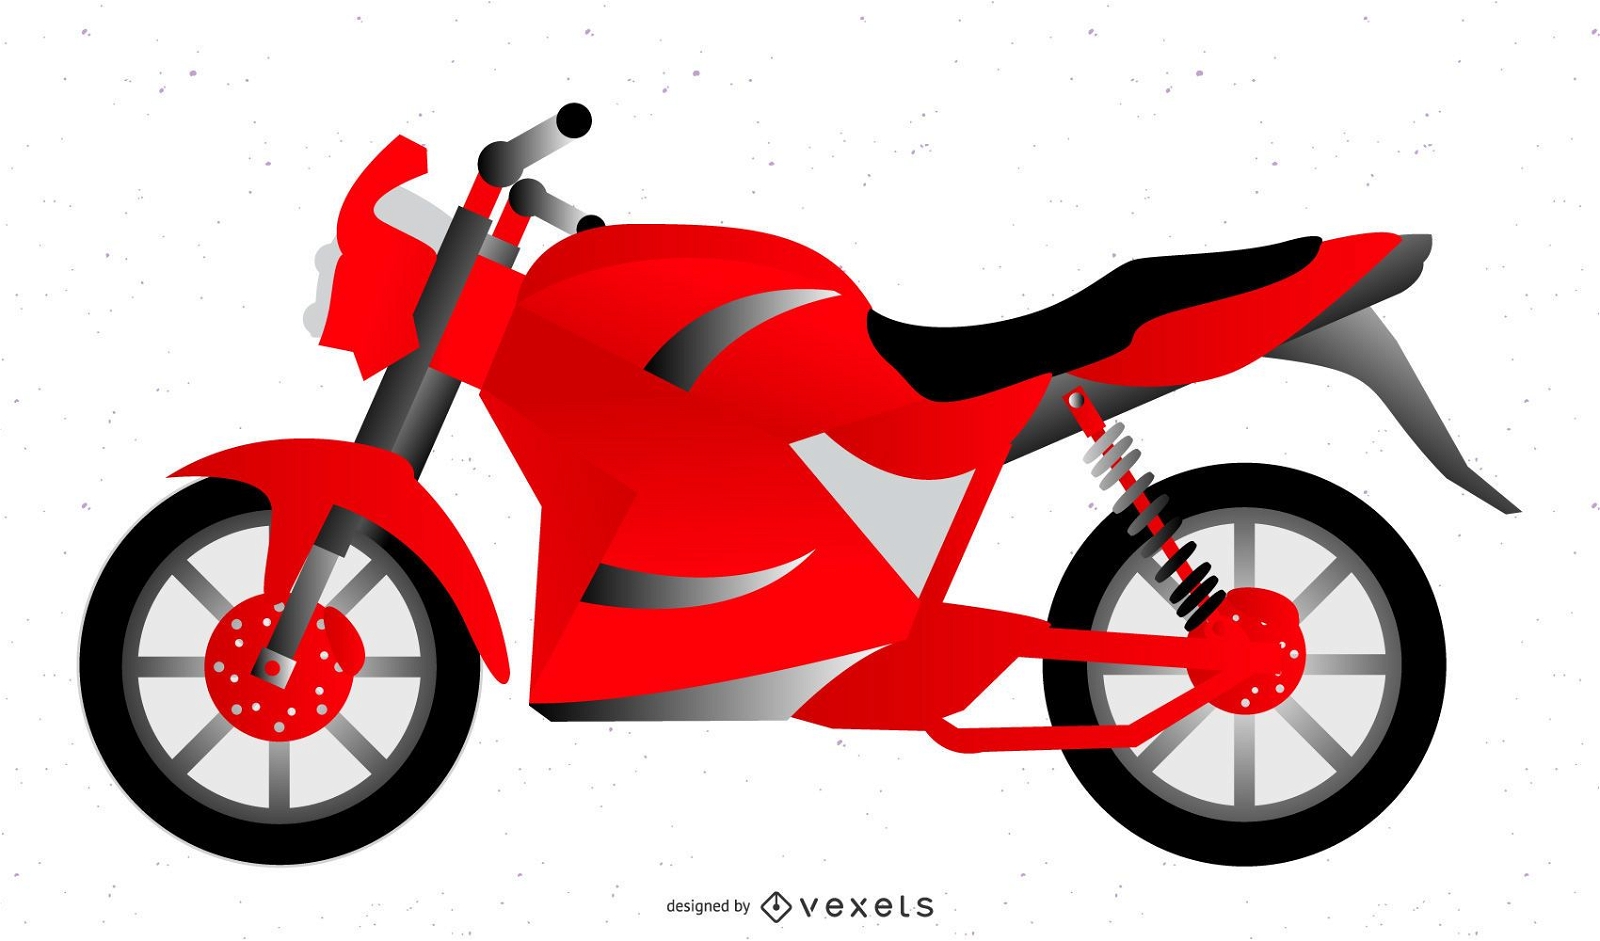 Rotes Motorrad